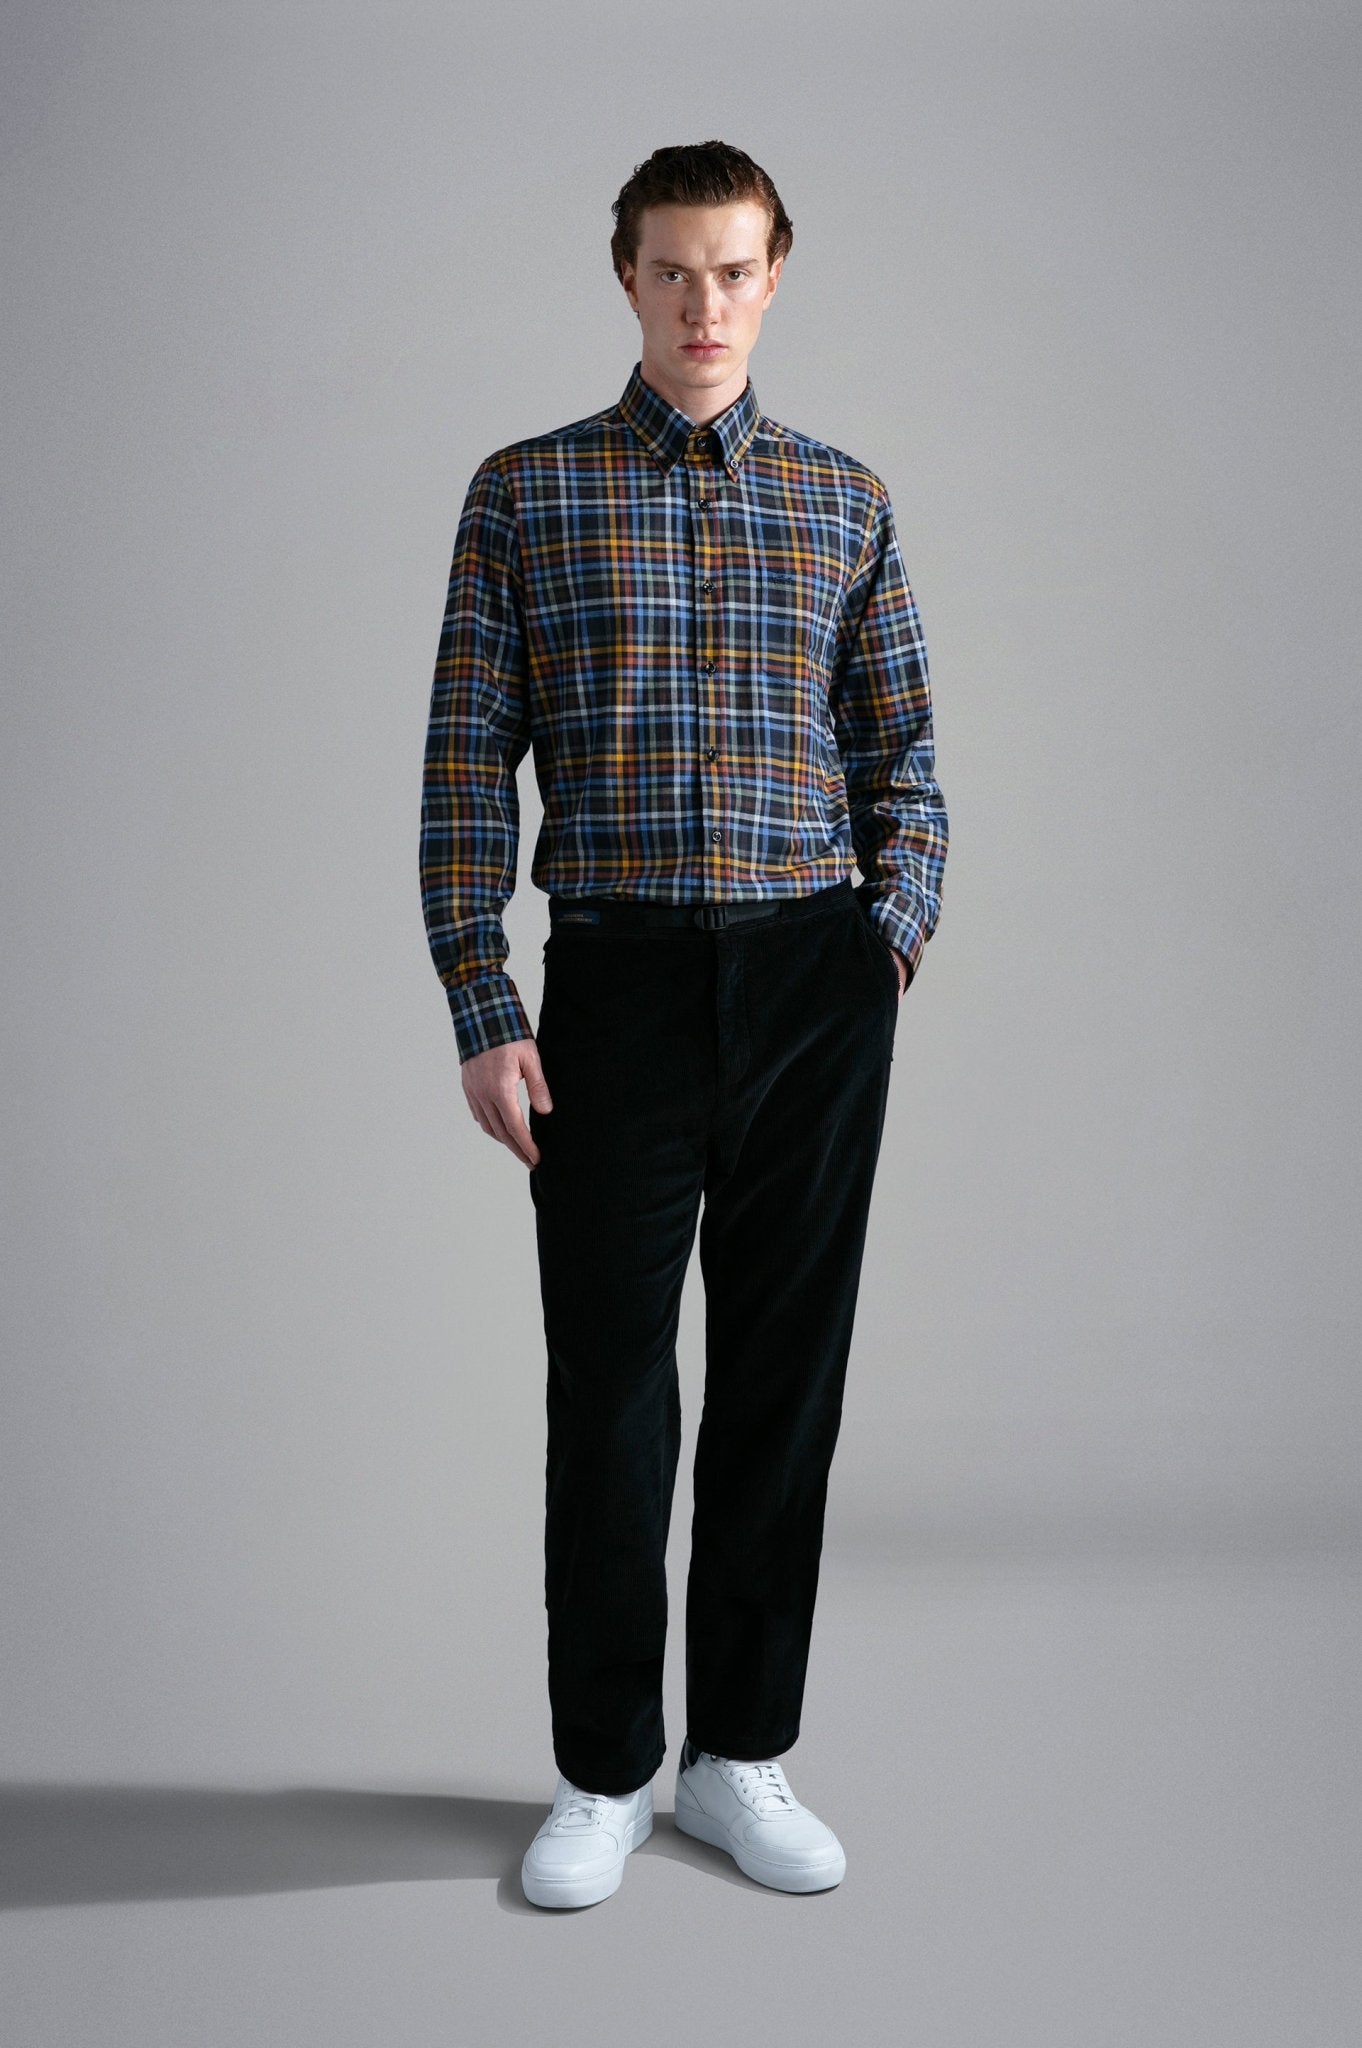 PAUL&SHARK X Long Sleeve Flannel Tartan Shirt BLACK/GREY/RED/BLUE - Henry BucksShirts38AW240043 - BLKGREDBLU - 40